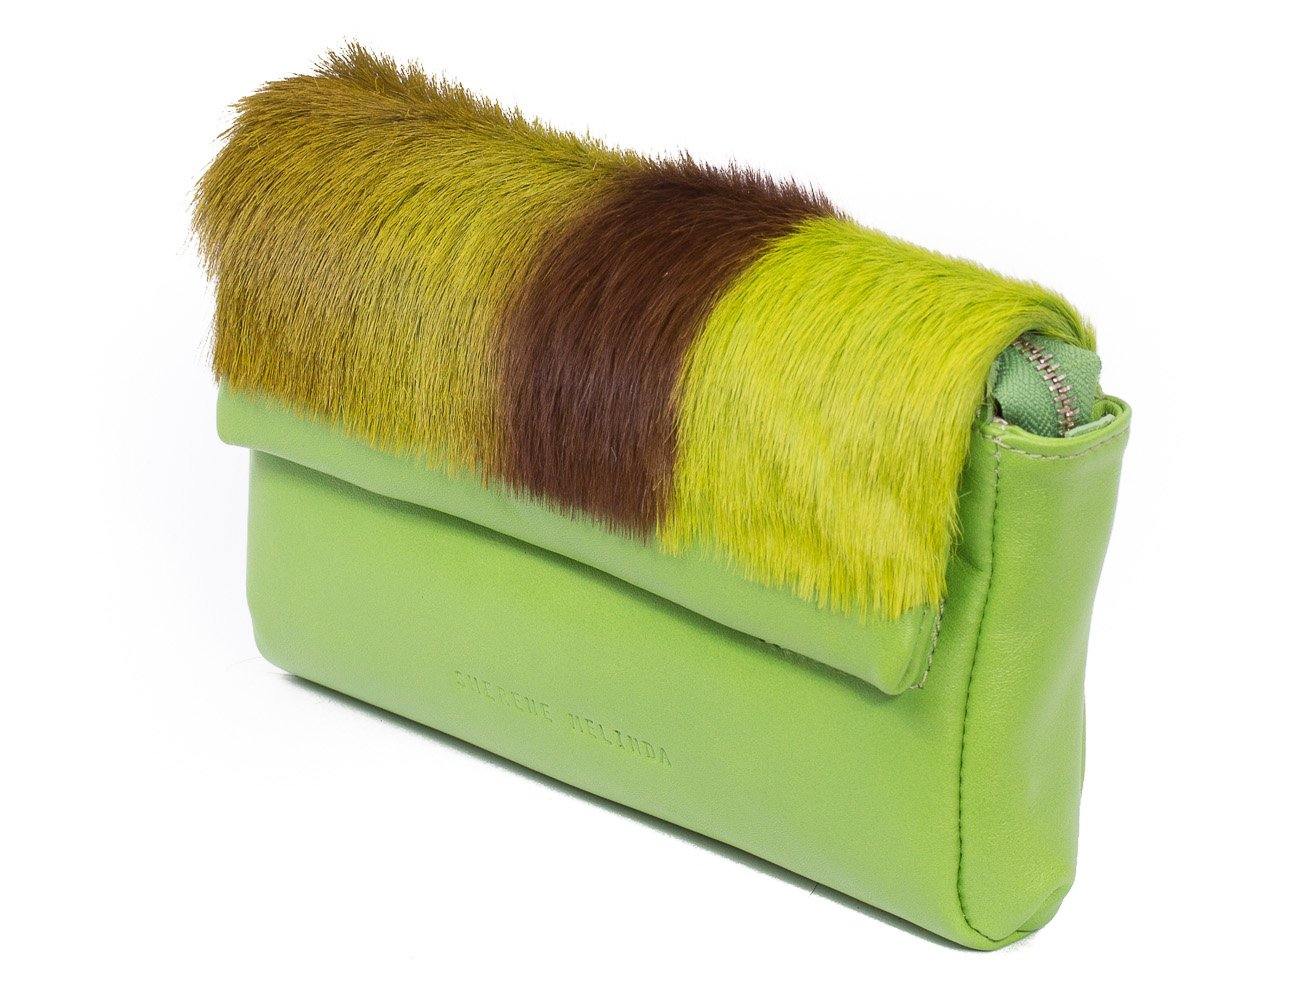 sherene melinda springbok hair-on-hide lime green leather Sophy SS18 Clutch Bag Stripe side angle